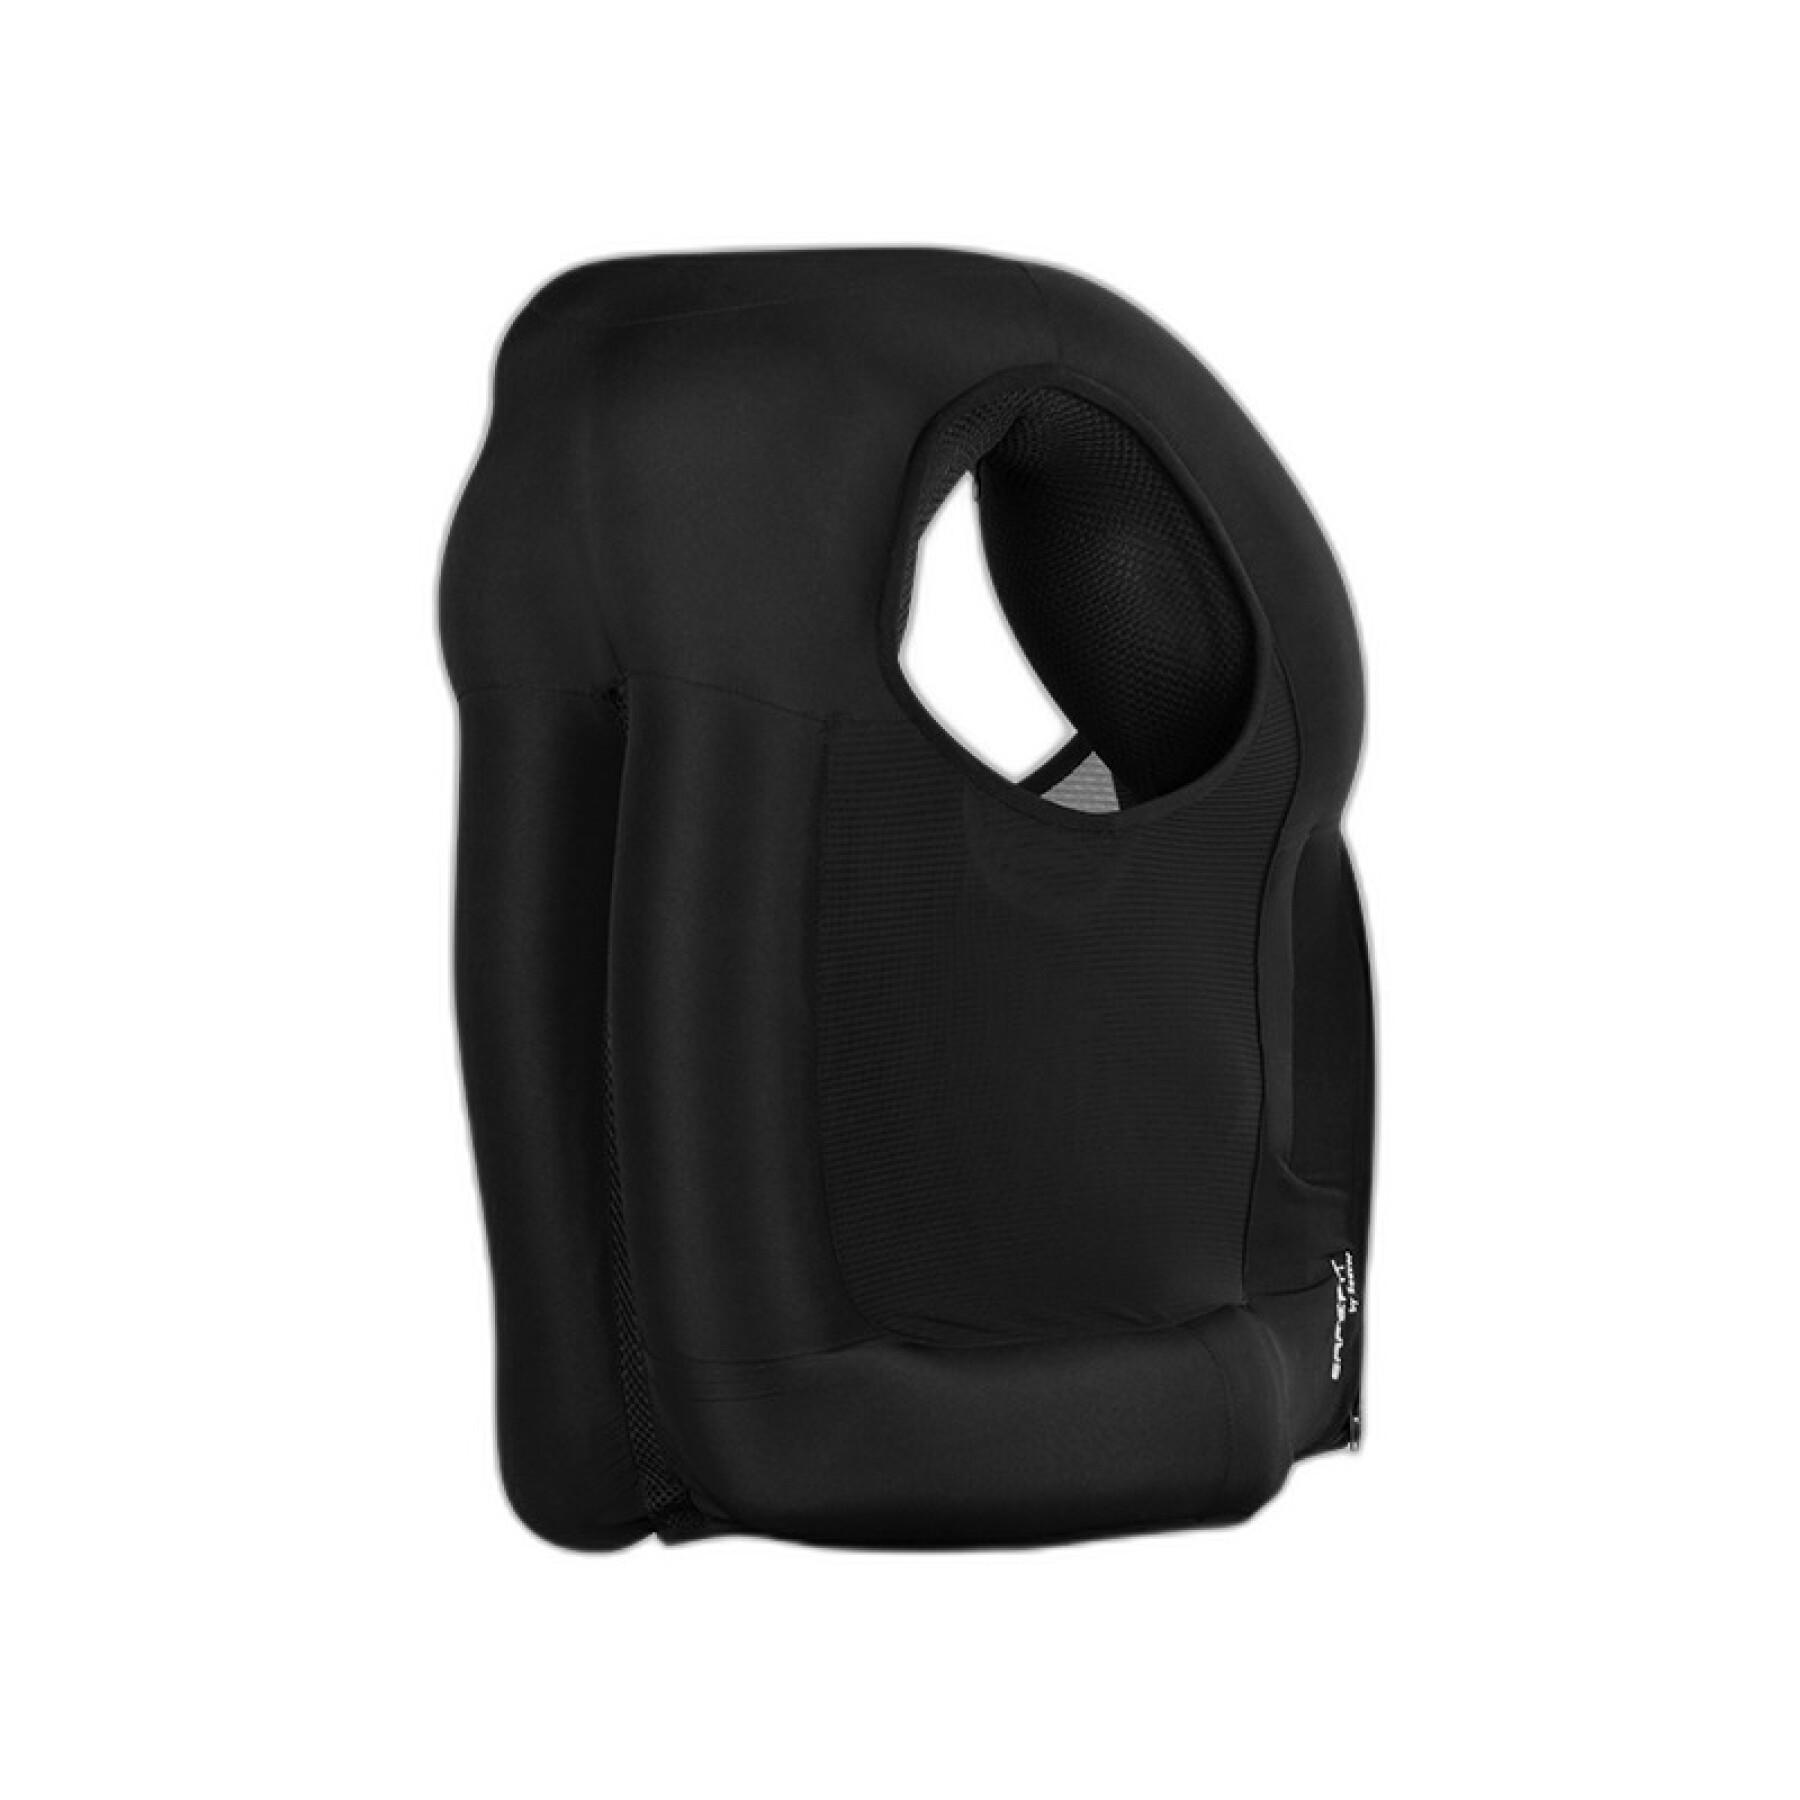 Gilet airbag da equitazione Seaver Safefit